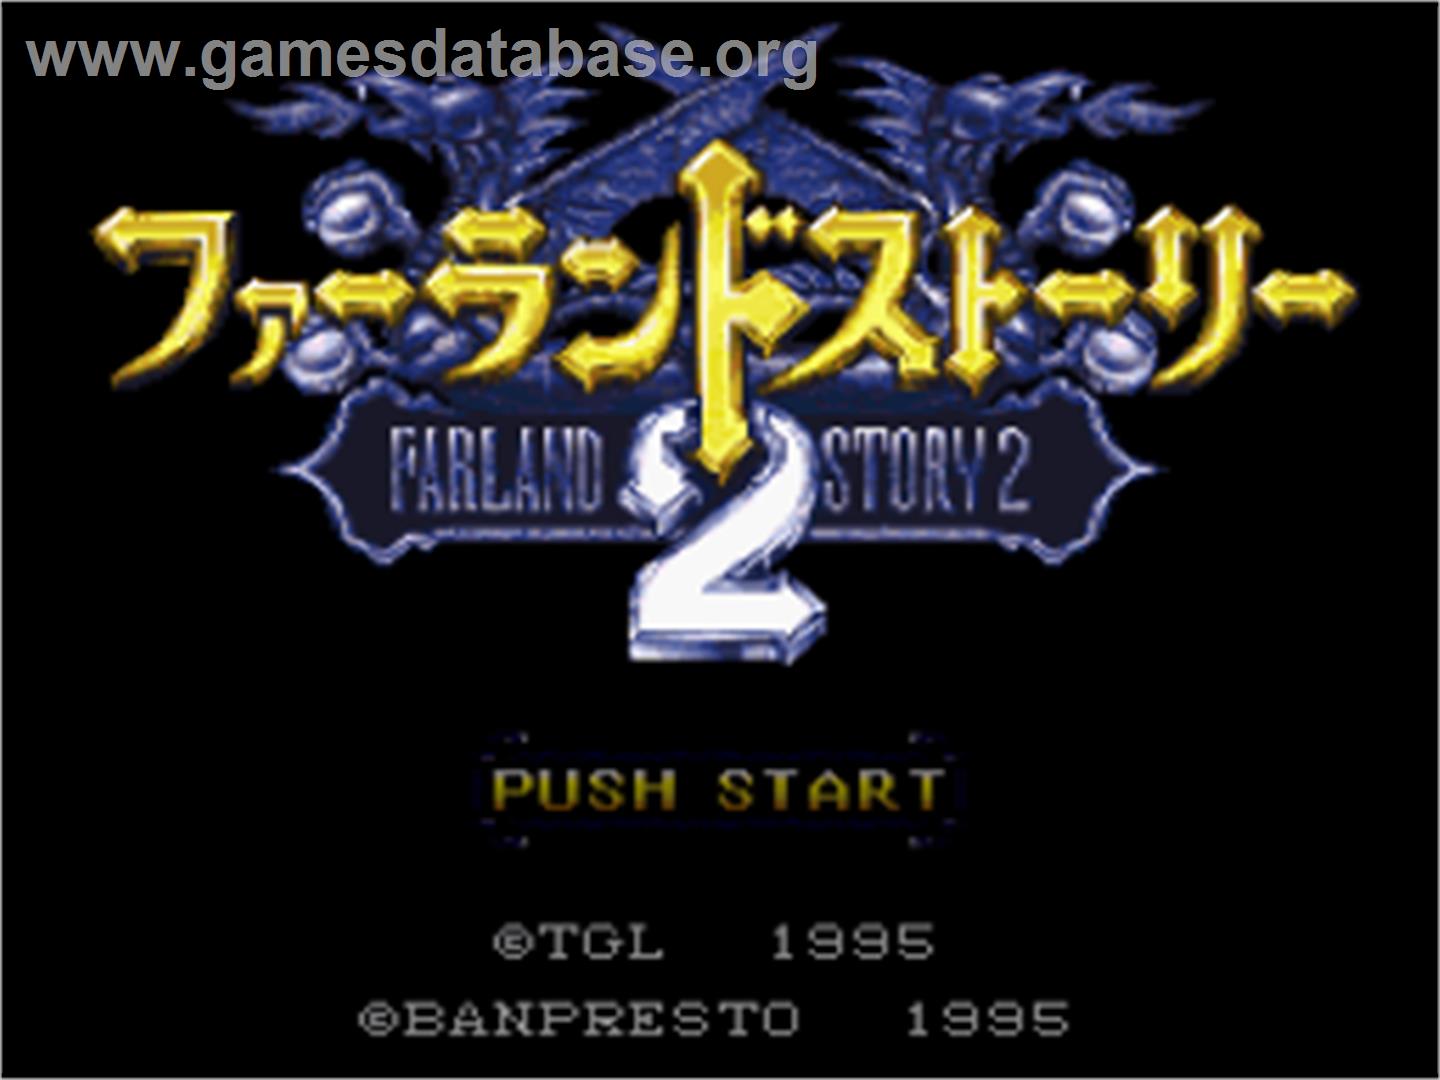 Farland Story 2 - Nintendo SNES - Artwork - Title Screen